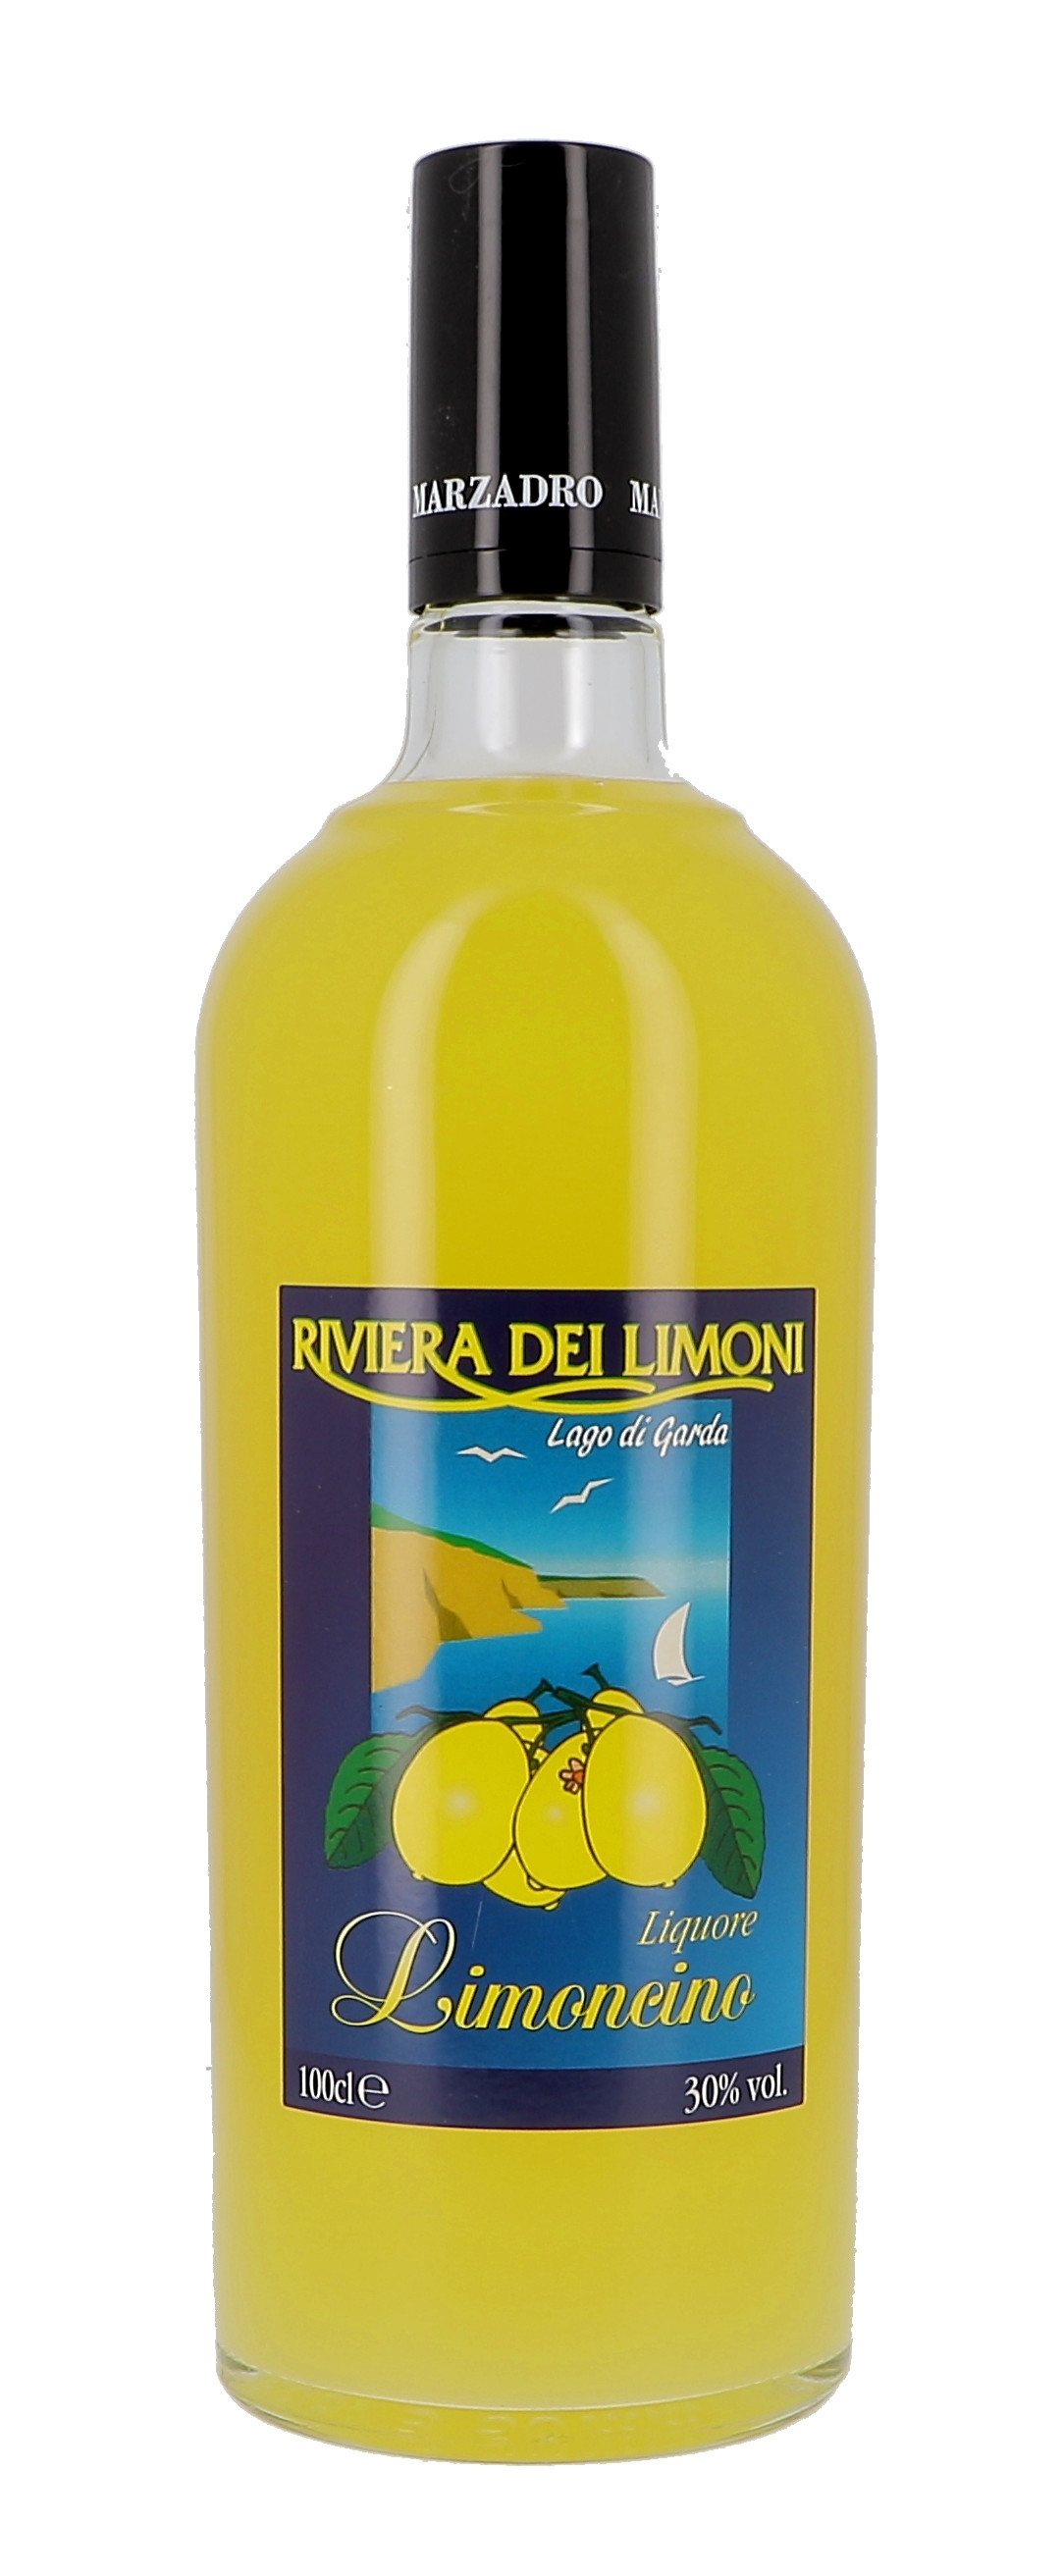 Marzadro Limoncino Rviera dei Limoni 1L 30% Liqueur Limoncello